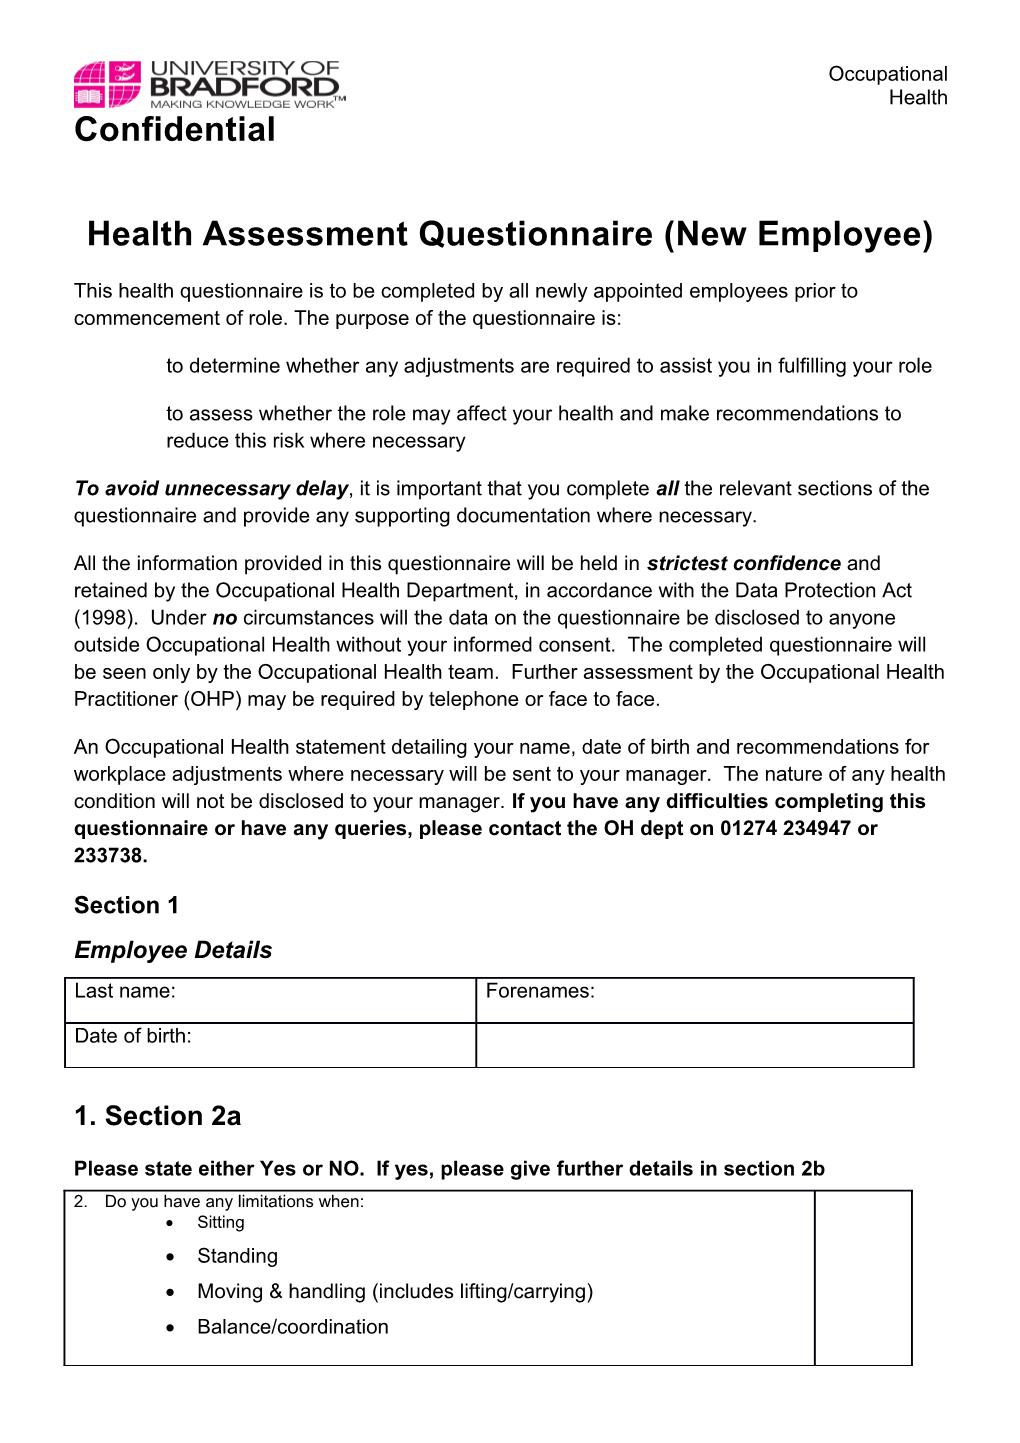 Health Assessment Questionnaire (New Employee)